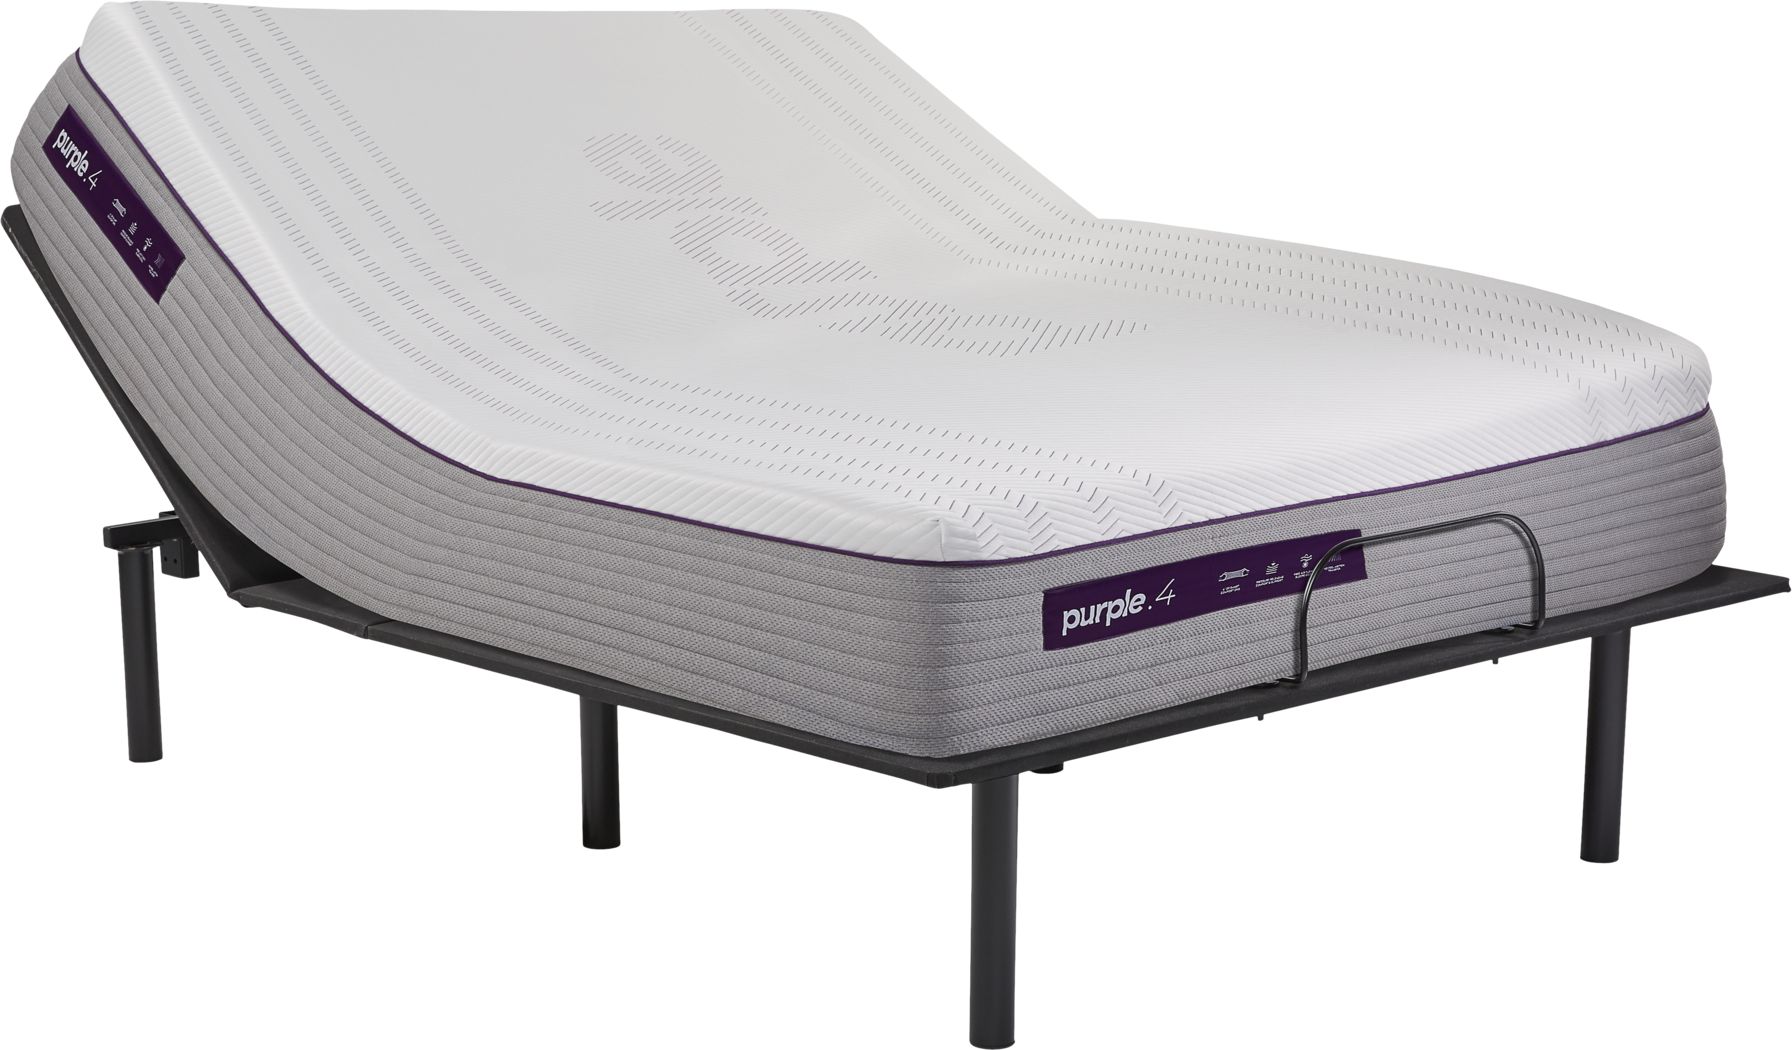 purple 4 mattress with adjustable base